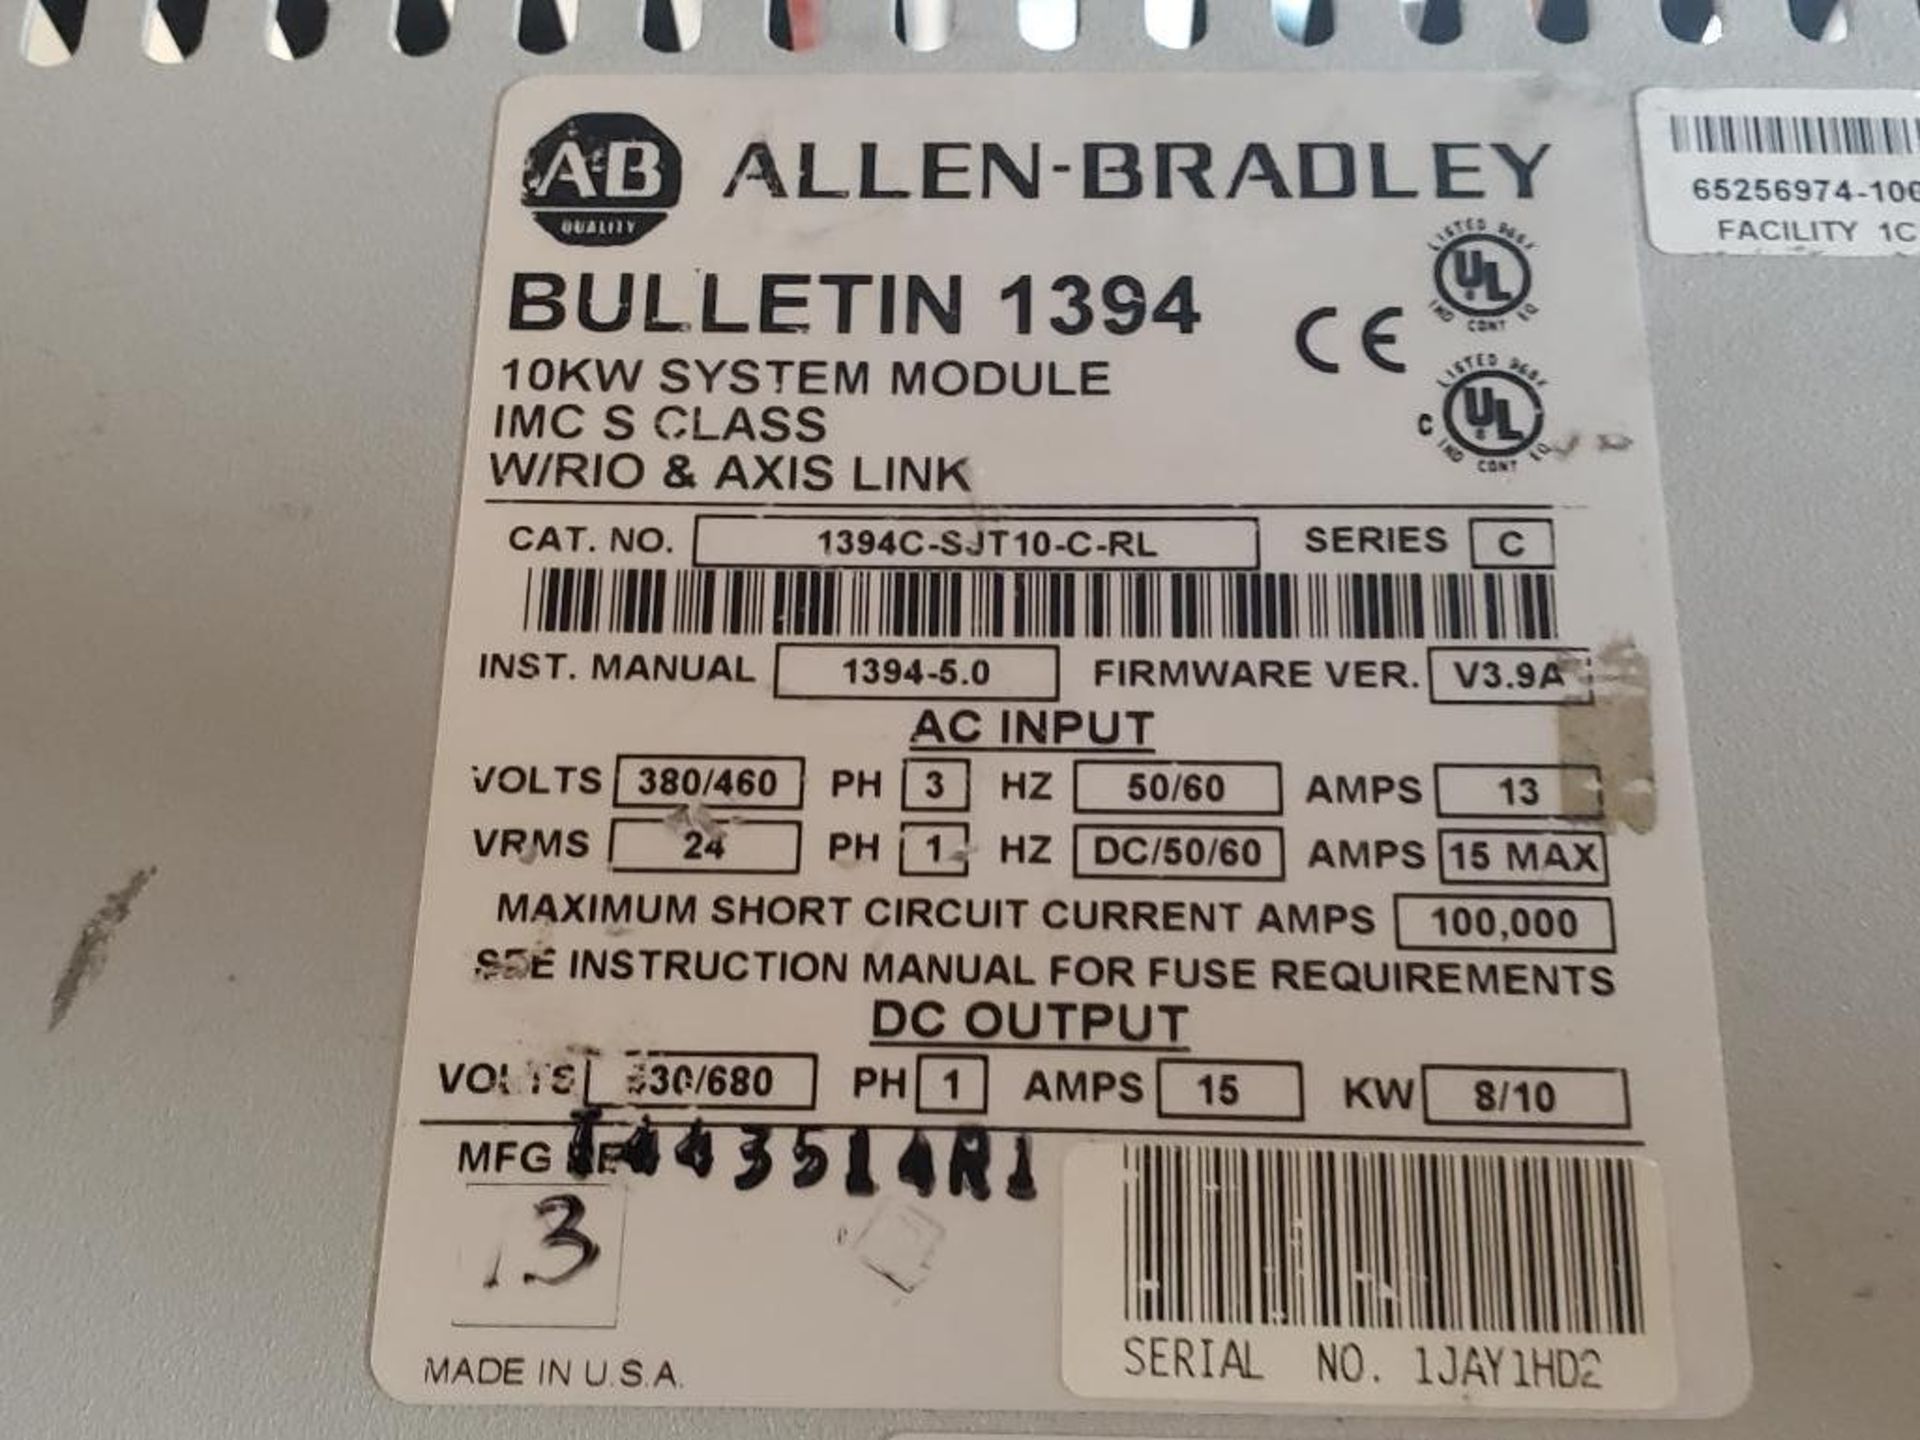 Allen Bradley digital servo controller GMC System module. 10kW W/rio & axis link. 1394C-SJT10-C-RL. - Image 4 of 7